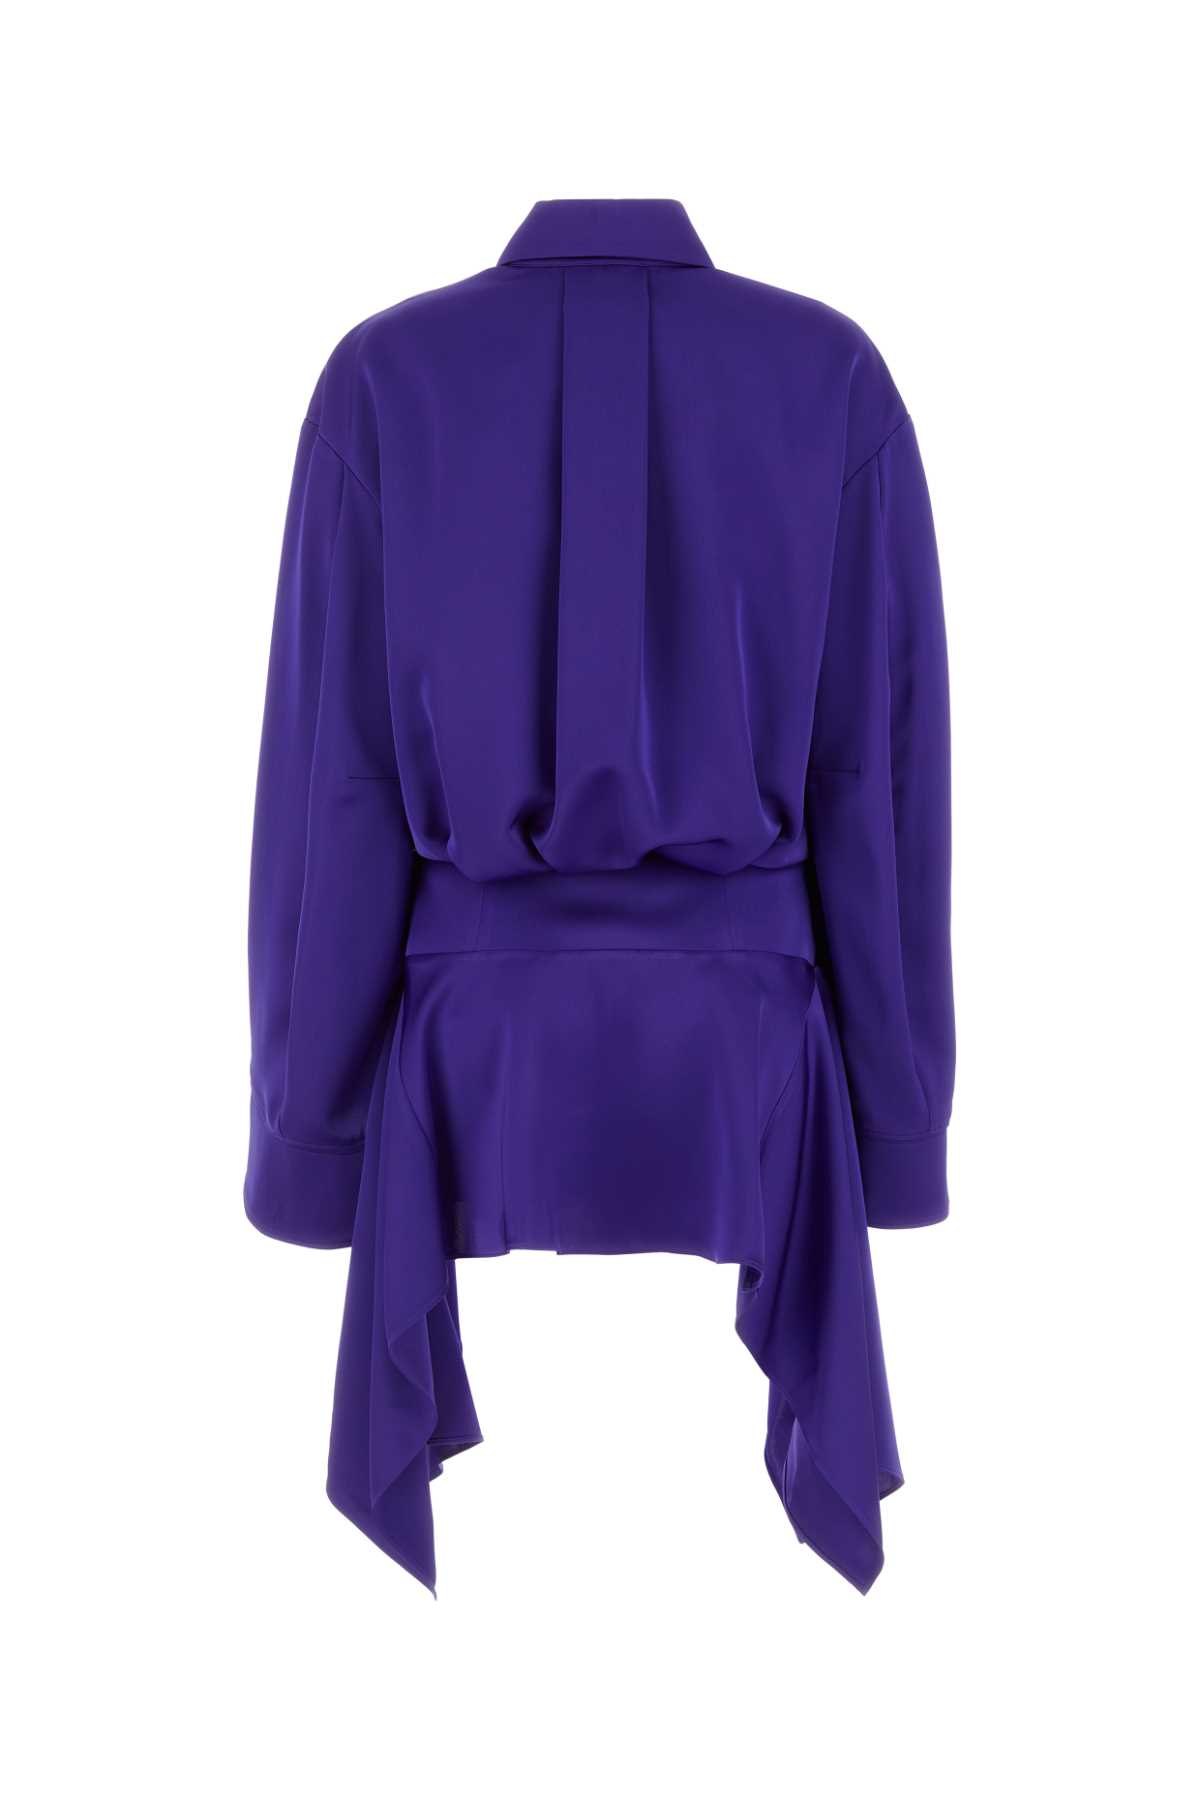 Attico Purple Satin Mischa Dress In Vividviolet